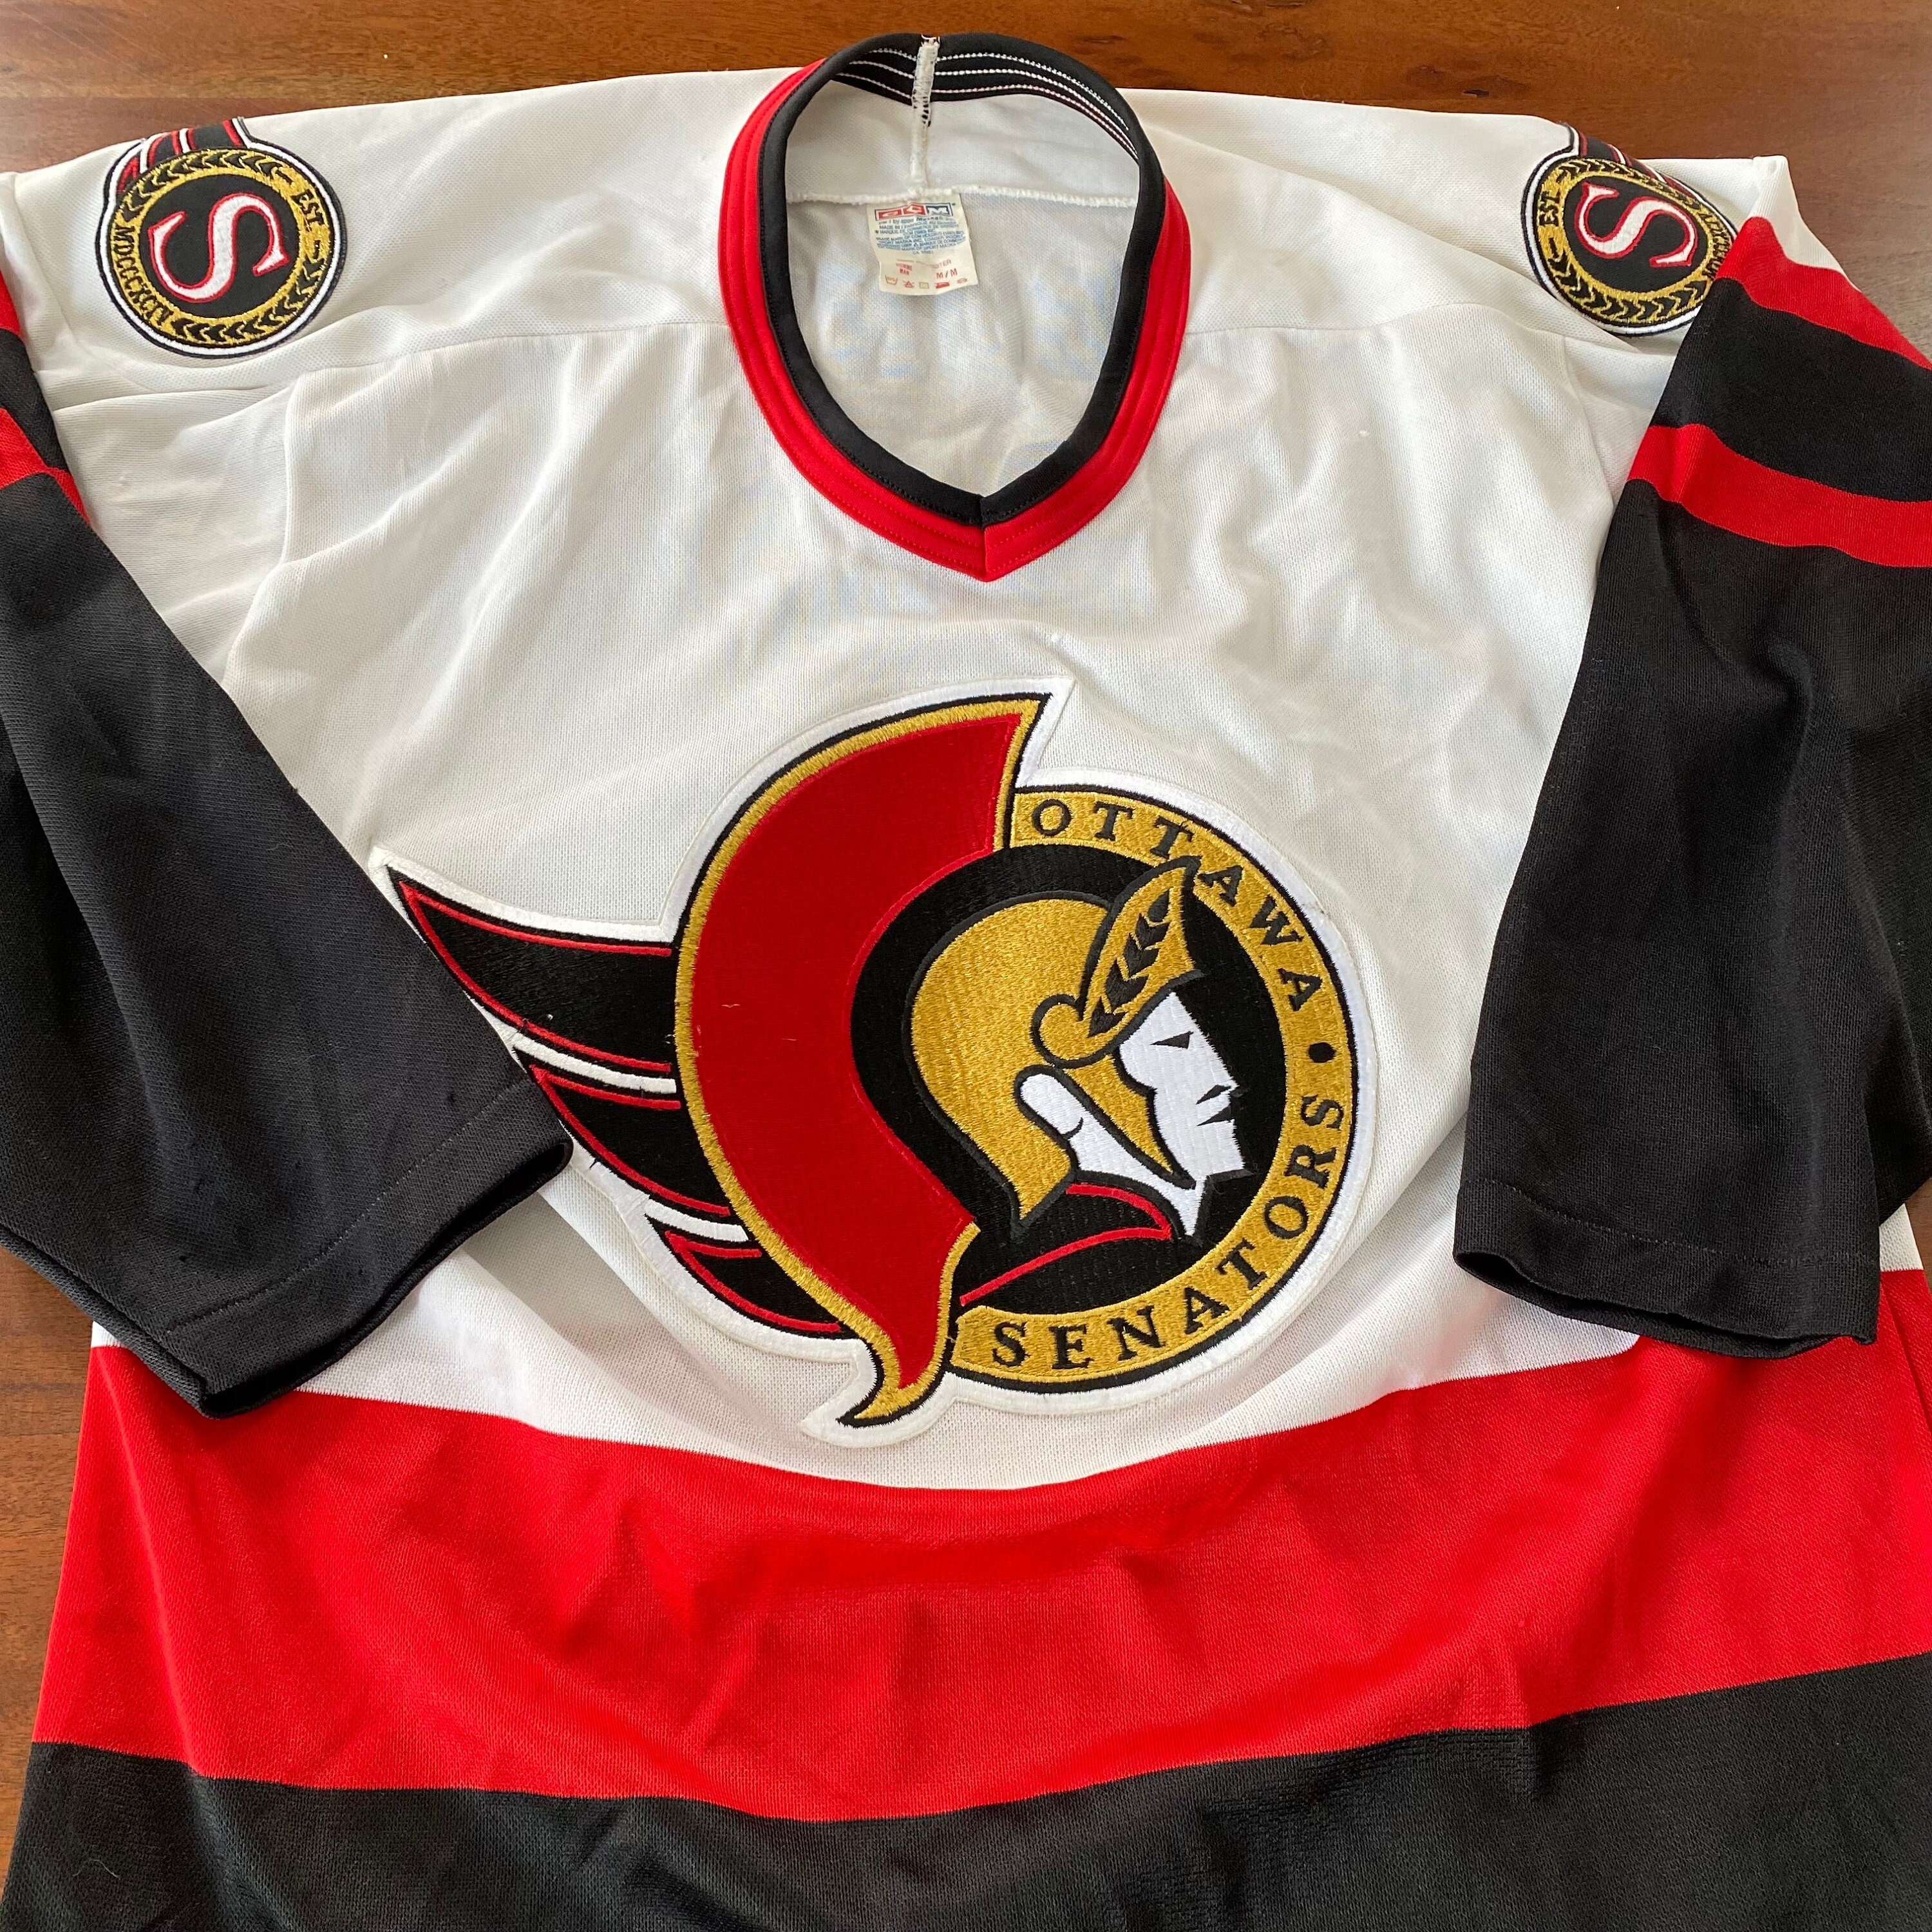 Tim Stutzle Ottawa Senators Jerseys, Tim Stutzle Senators T-Shirts, Gear